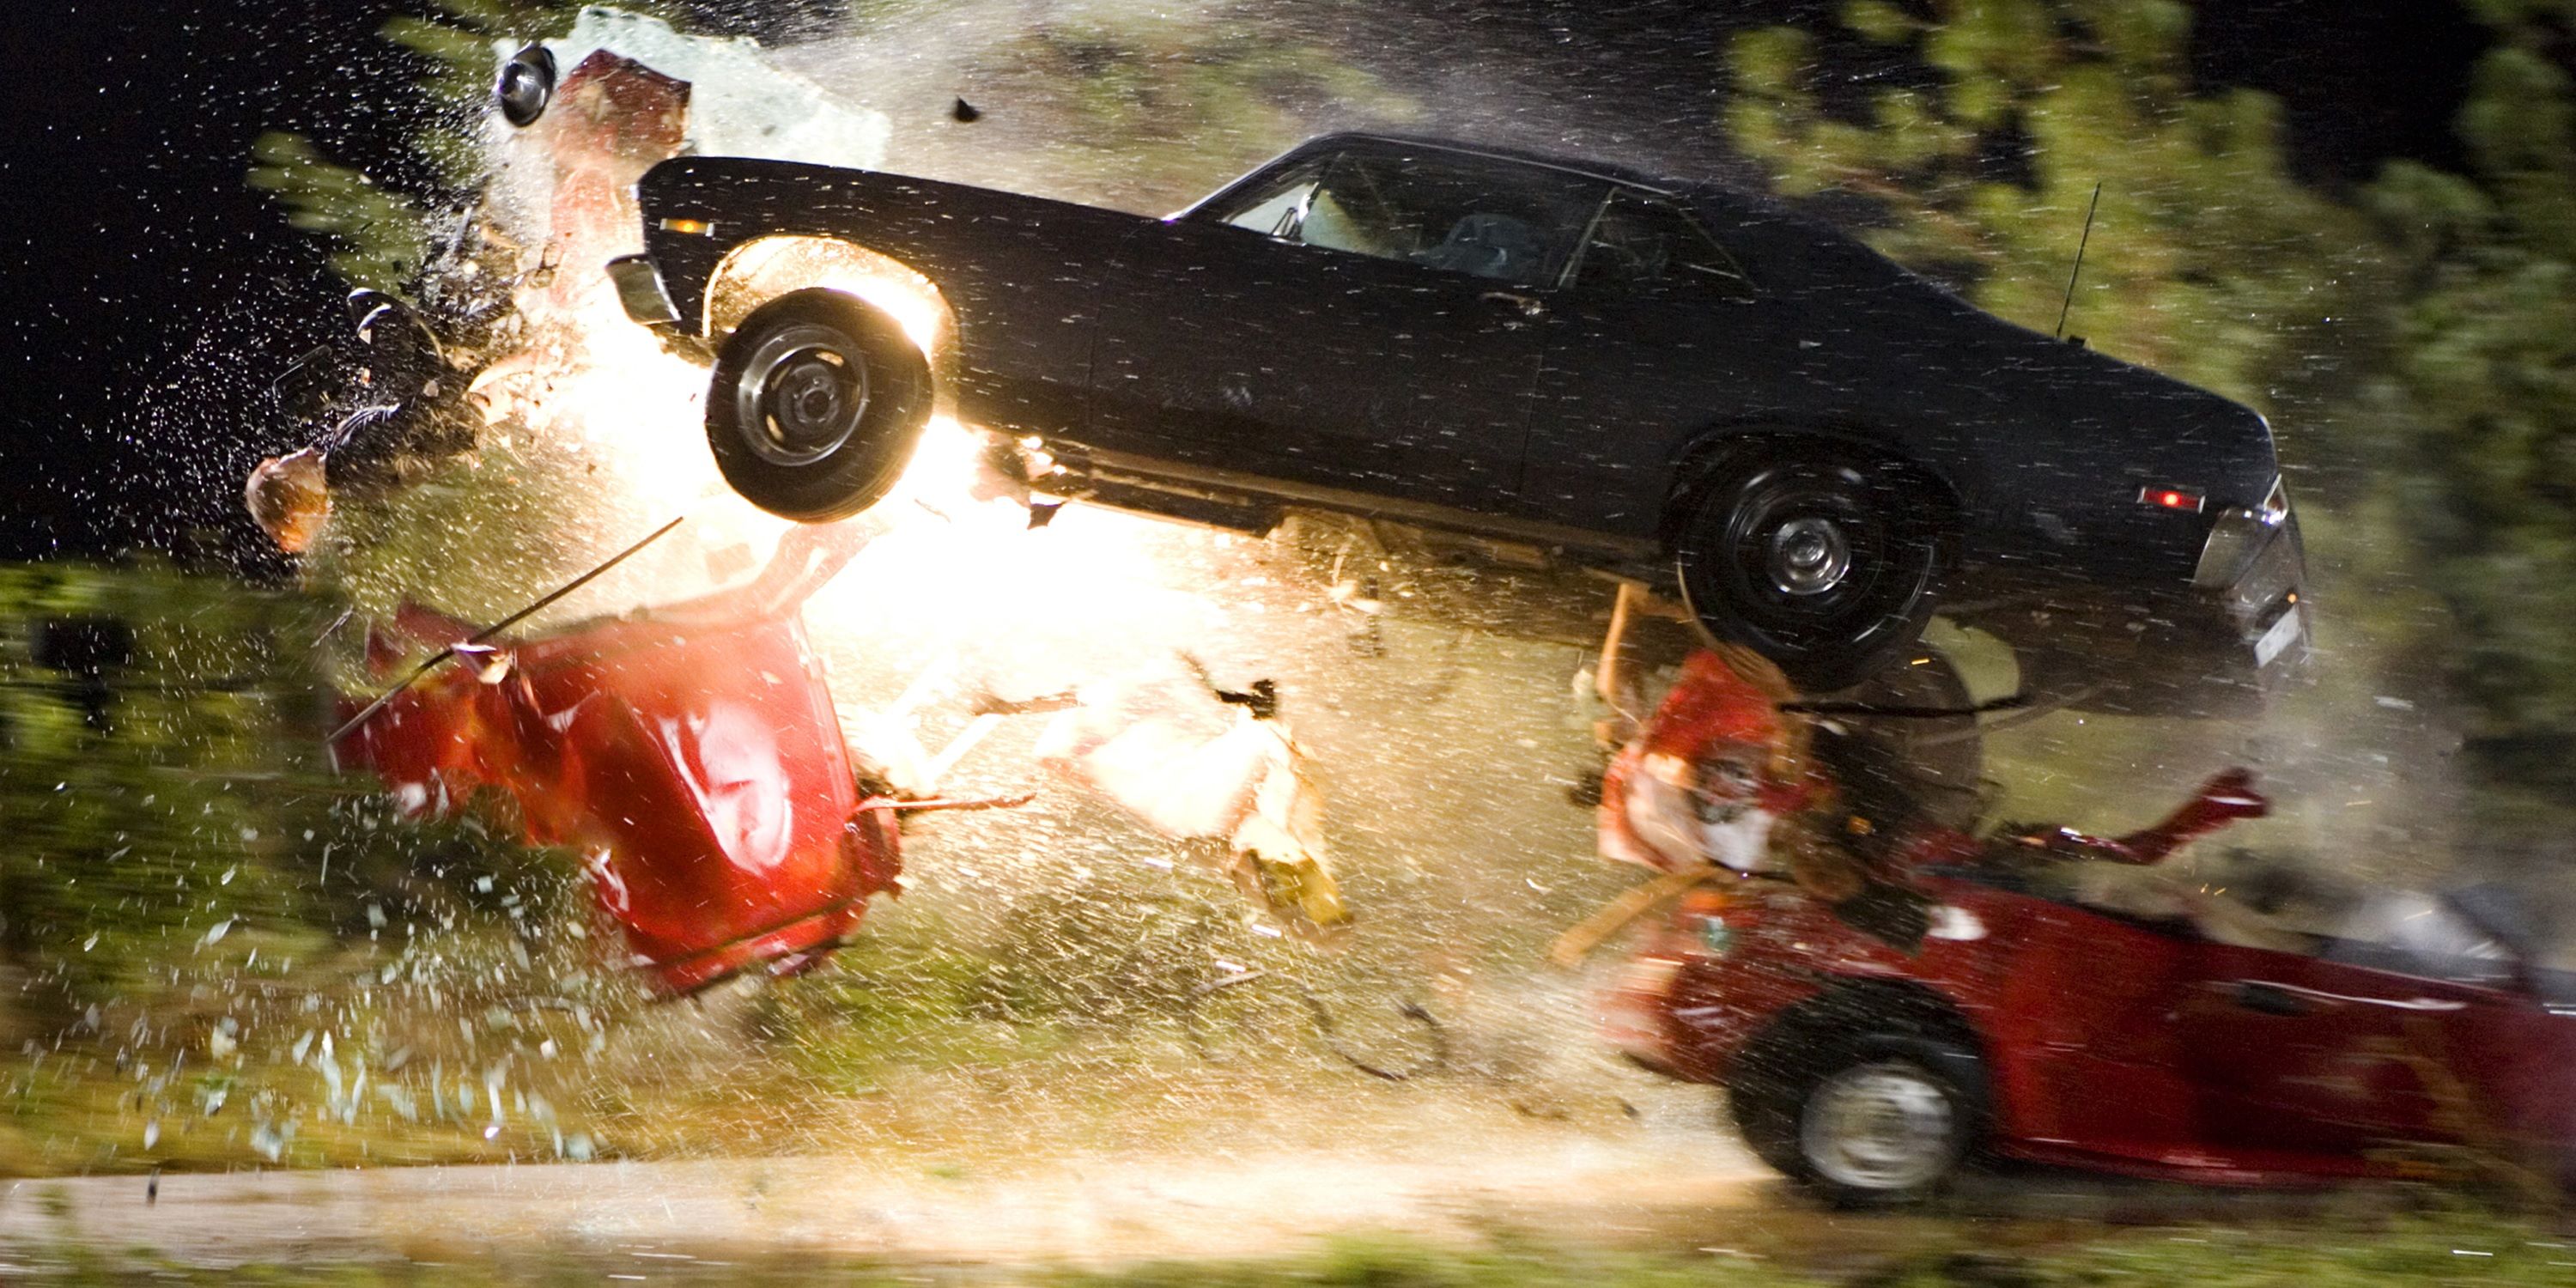 A car crash in Quentin Tarantino's Death Proof